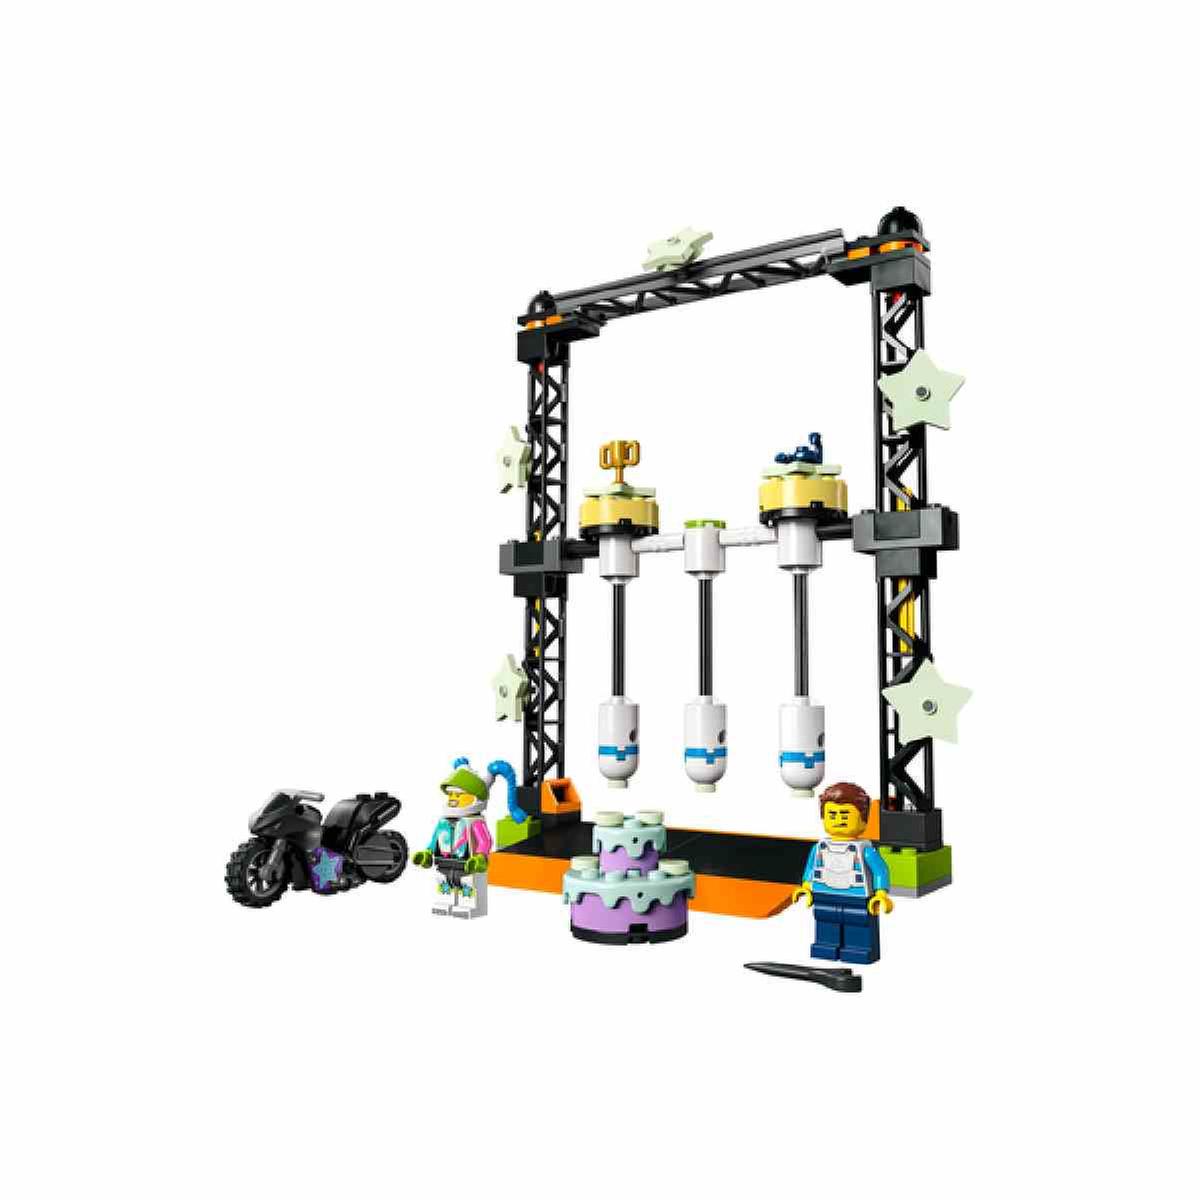 LEGO City Stuntz The Knockdown Challenge Set - Imagine That Toys